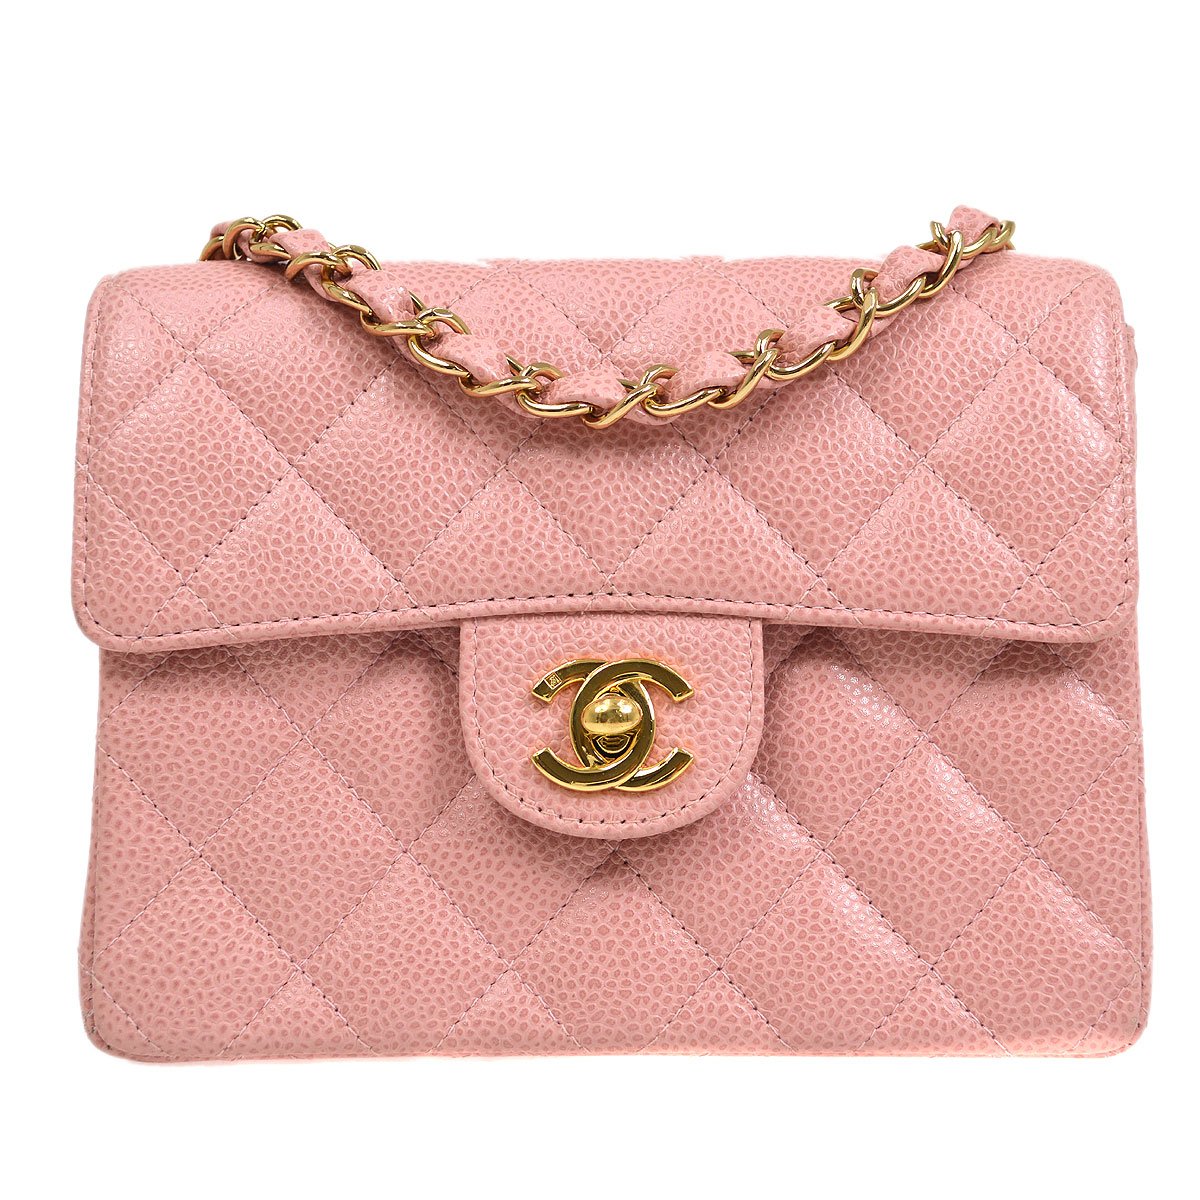 Authentic Chanel CC Marshmallow Handbag purse Bag Mini Tote White Pink